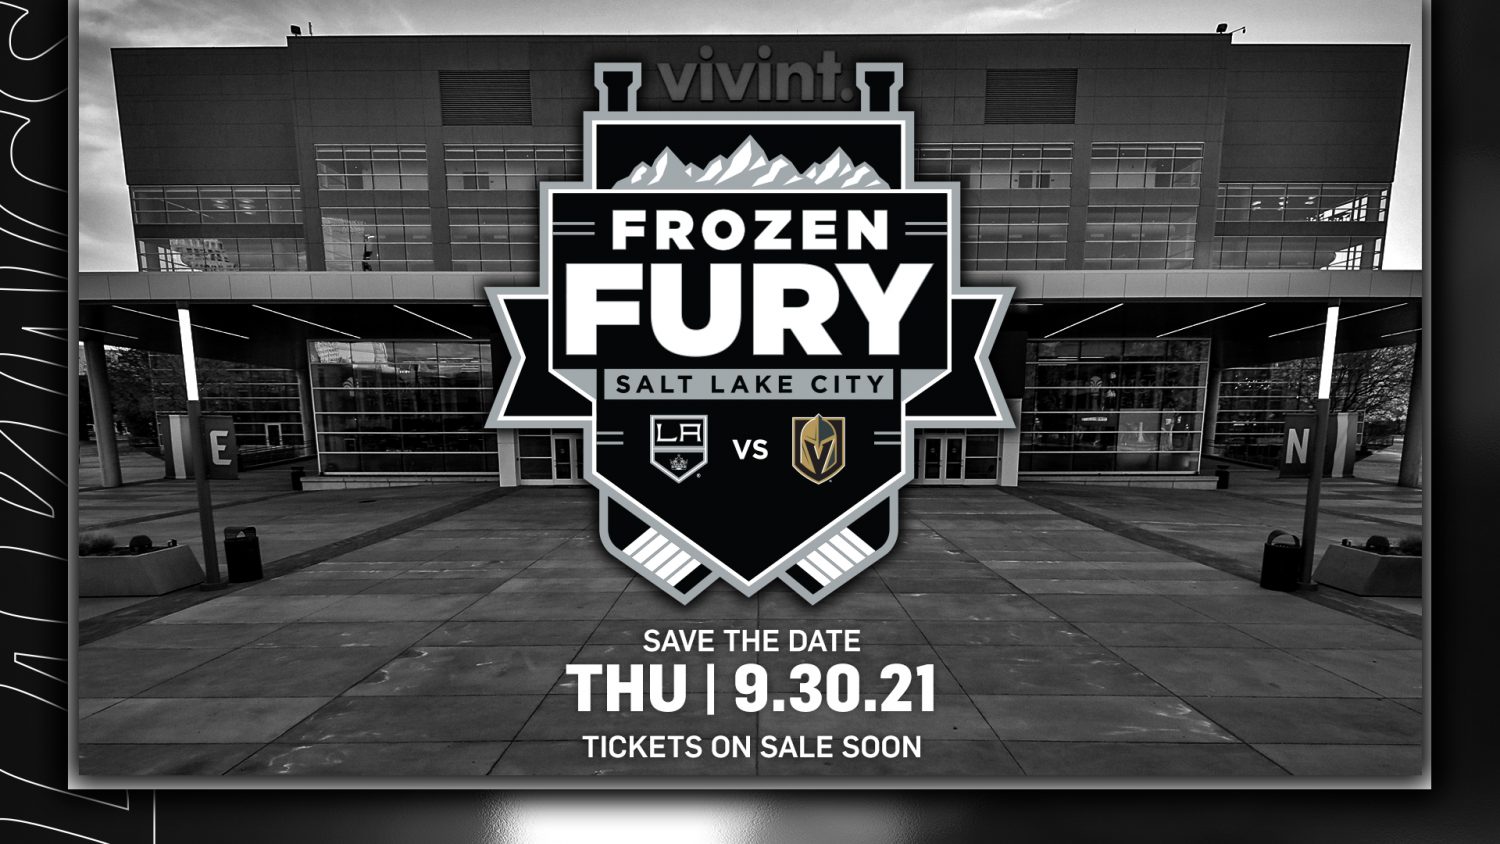 "Frozen Fury Returns Kings to host Vegas for preseason game in Utah